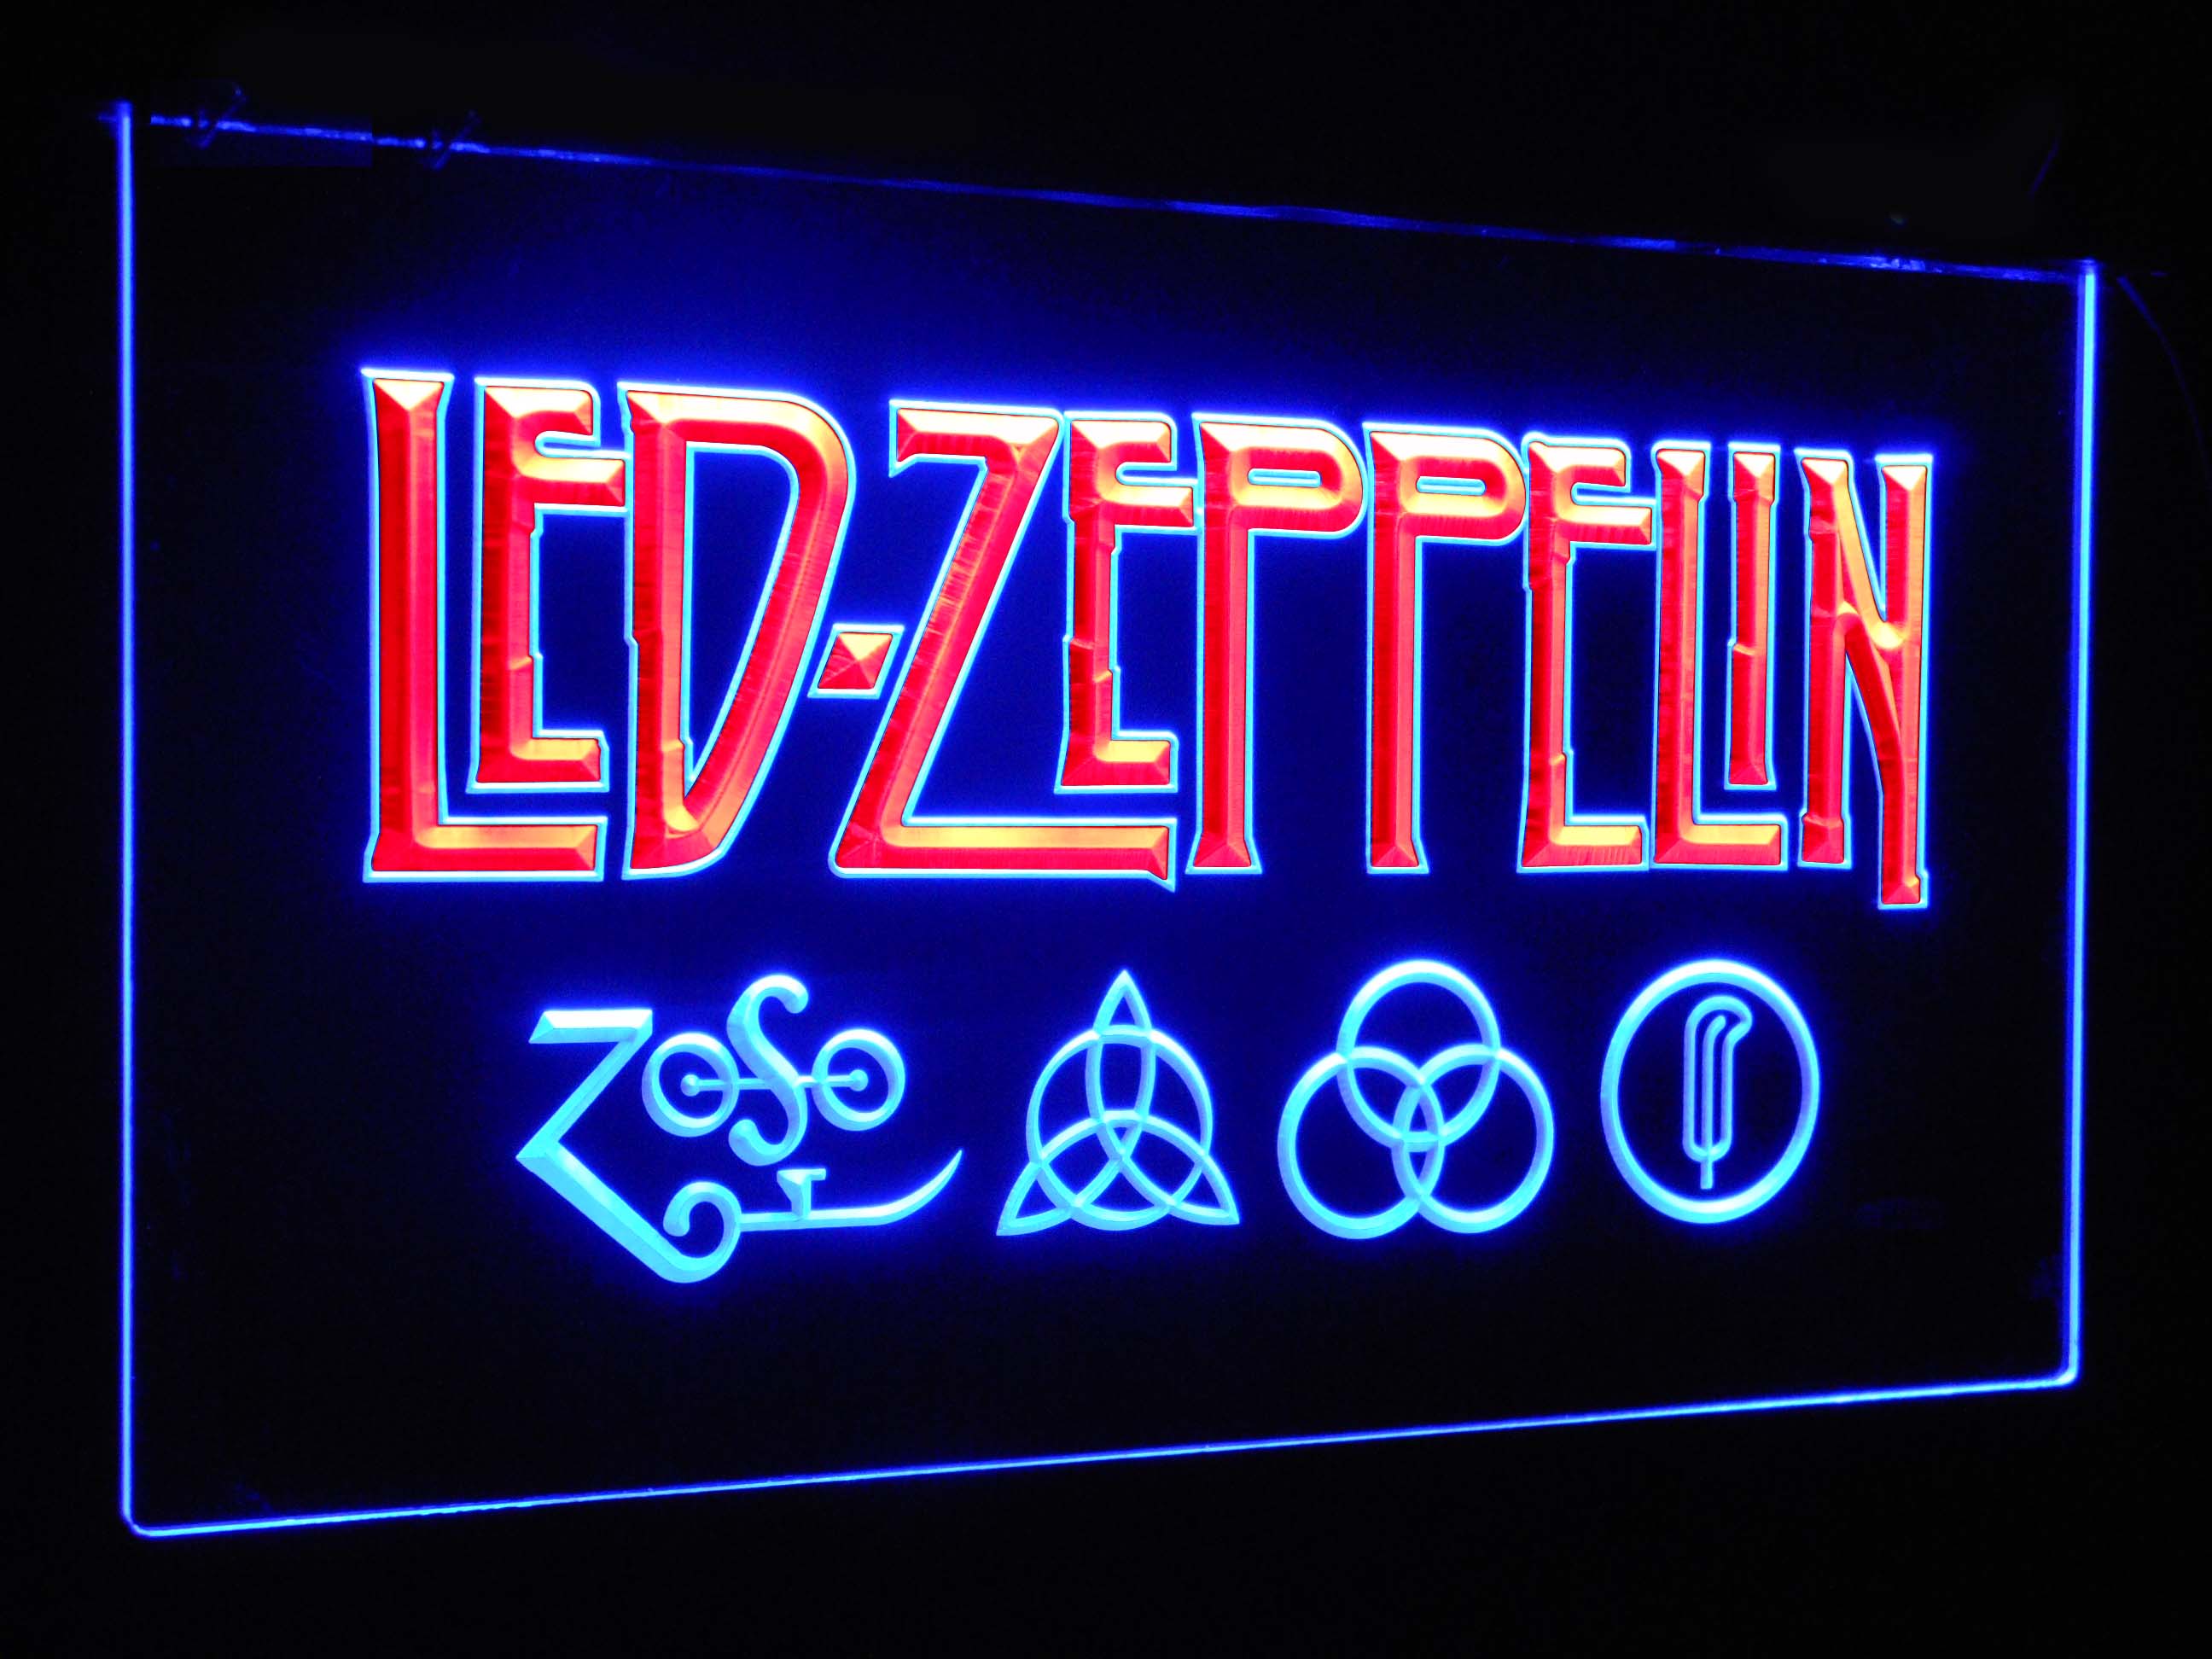 Led Zeppelin Celebration Day Poster